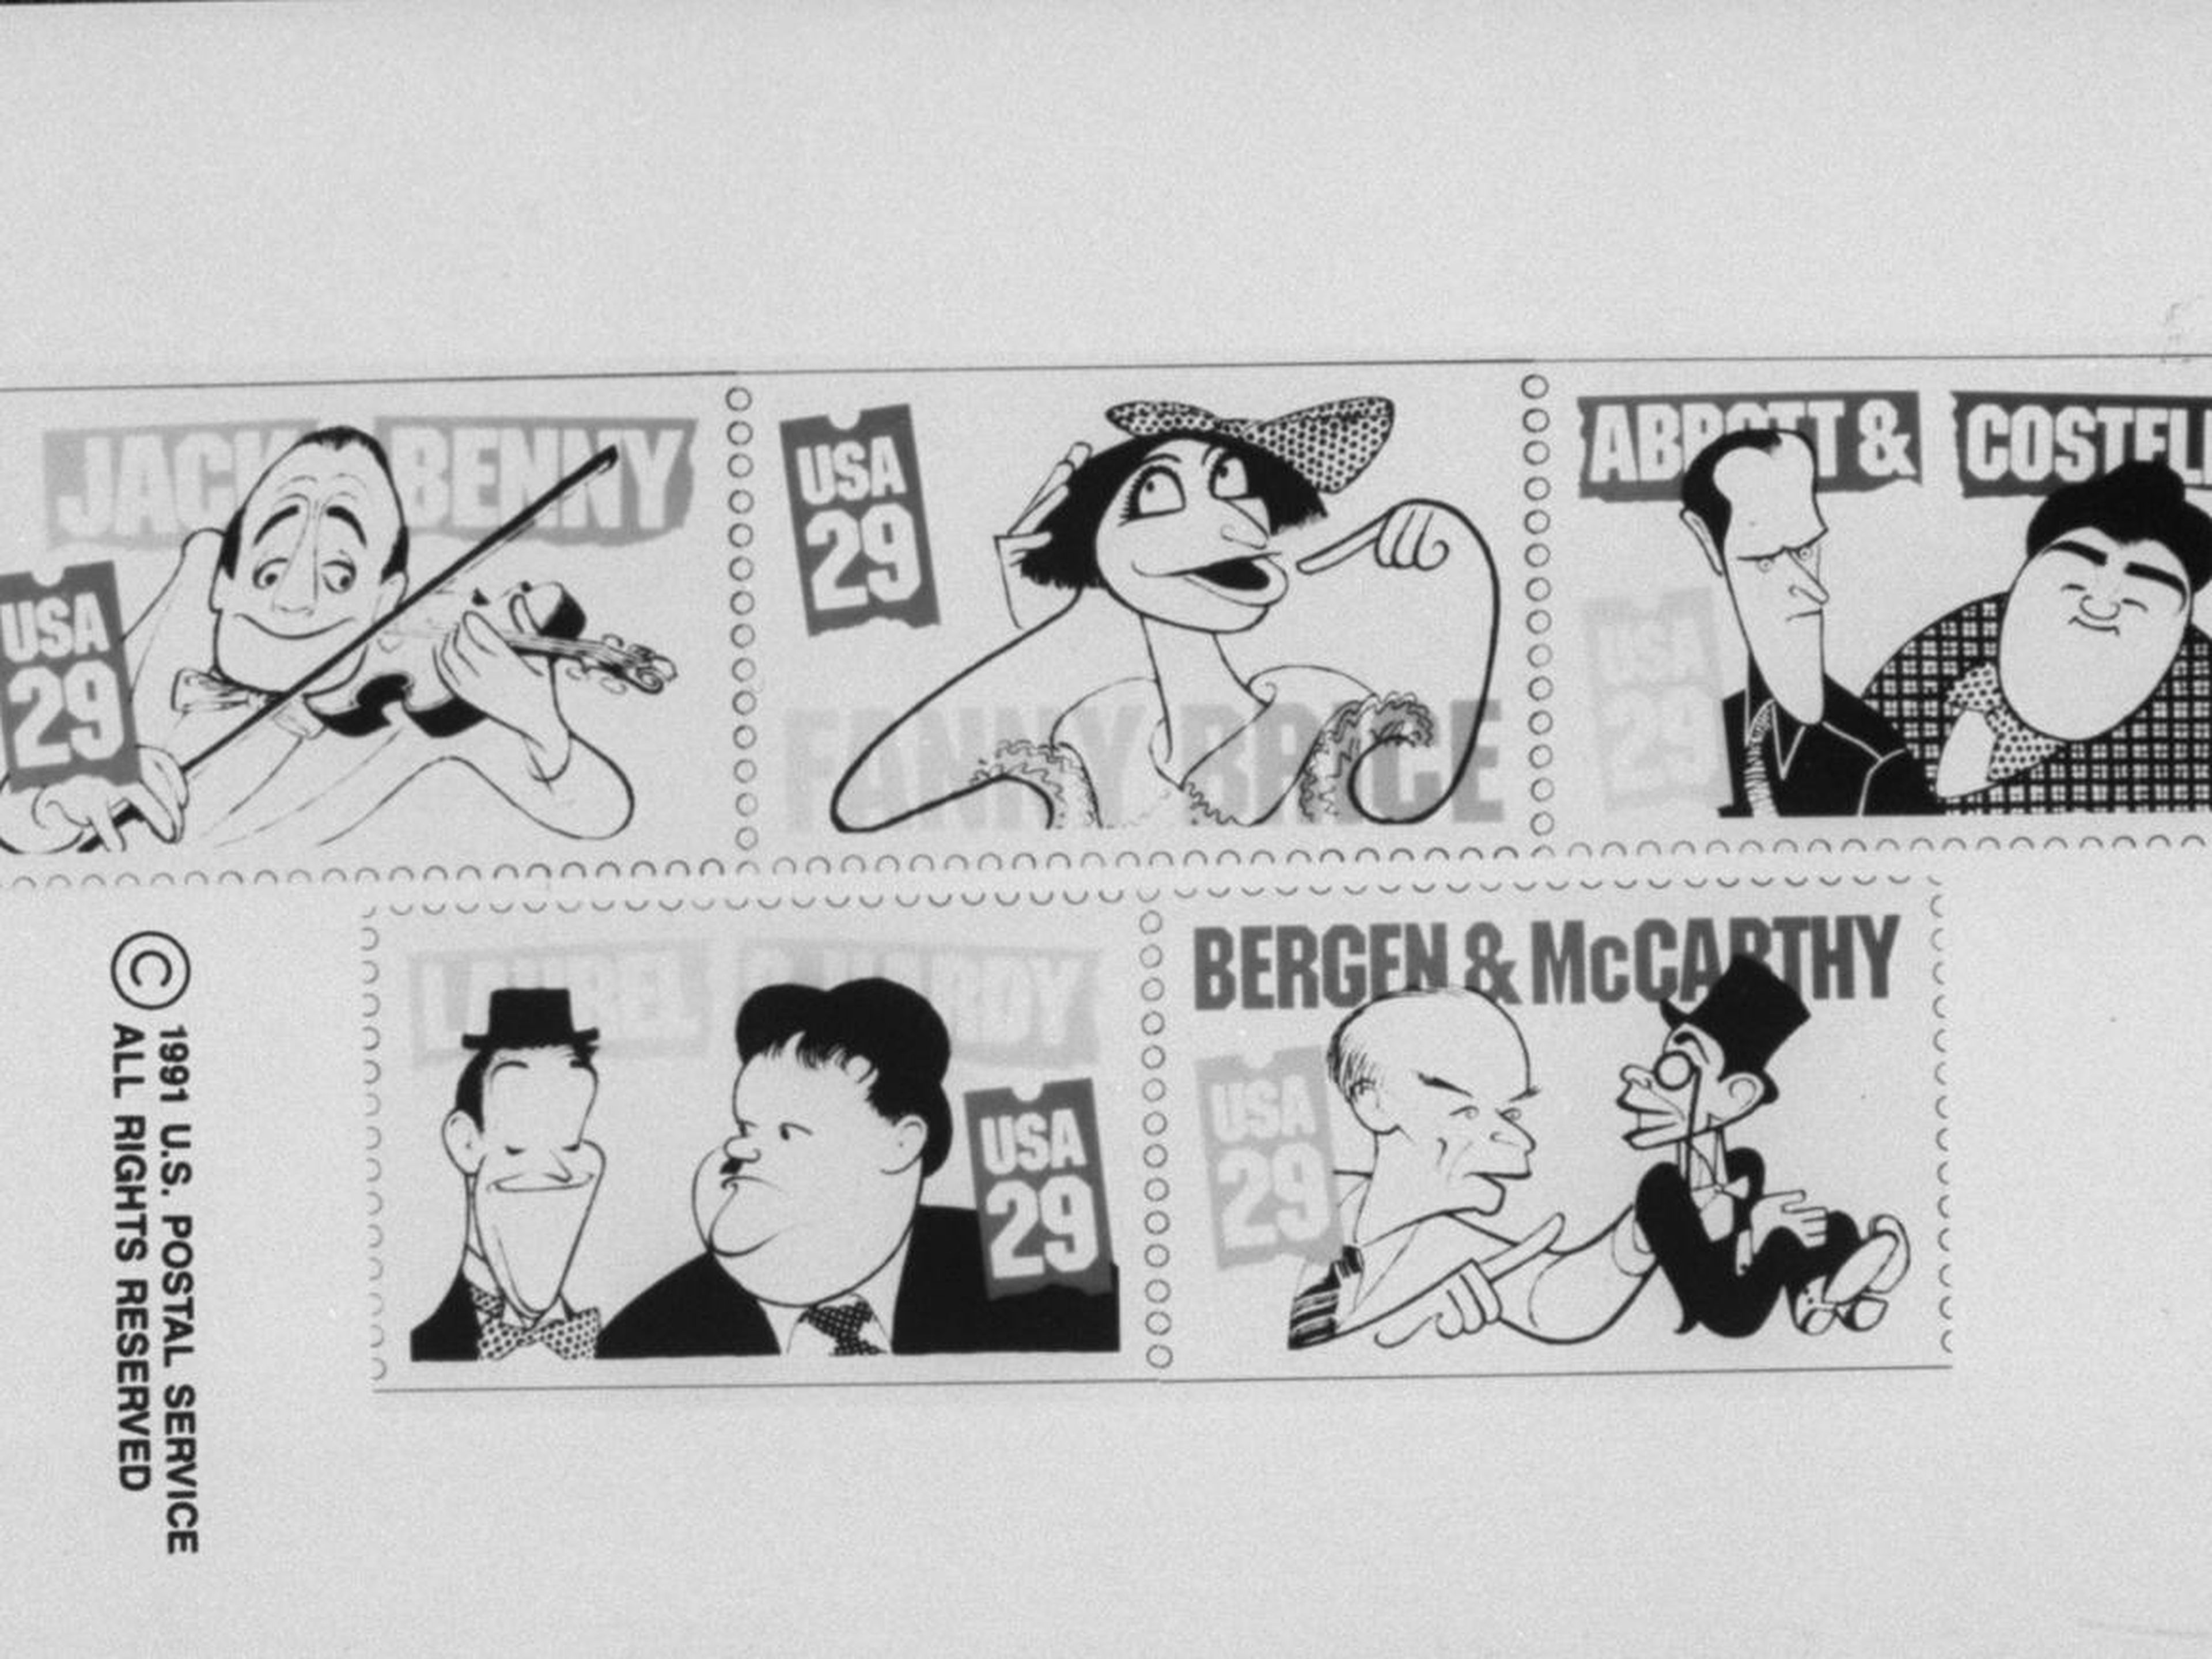 Sellos de caricatura del caricaturista Al Hirschfeld de Laurel & Hardy, Jack Benny, Fanny Brice, Abbott & Costello & Bergen & McCarthy.